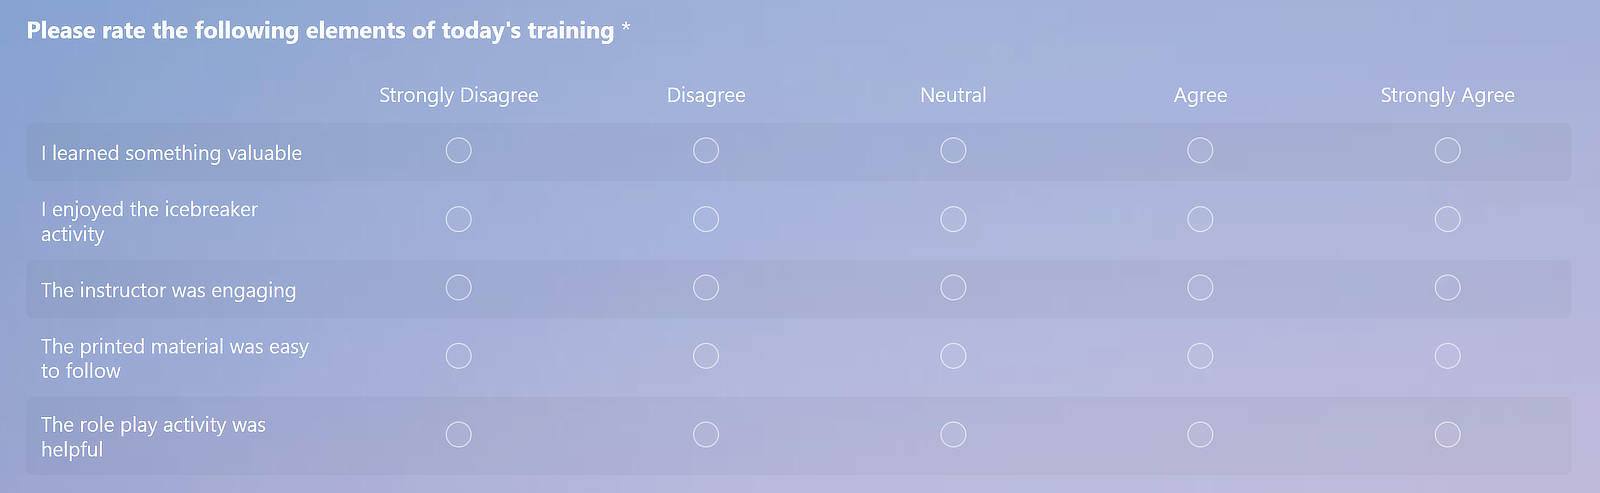 Rating training - Likert scale